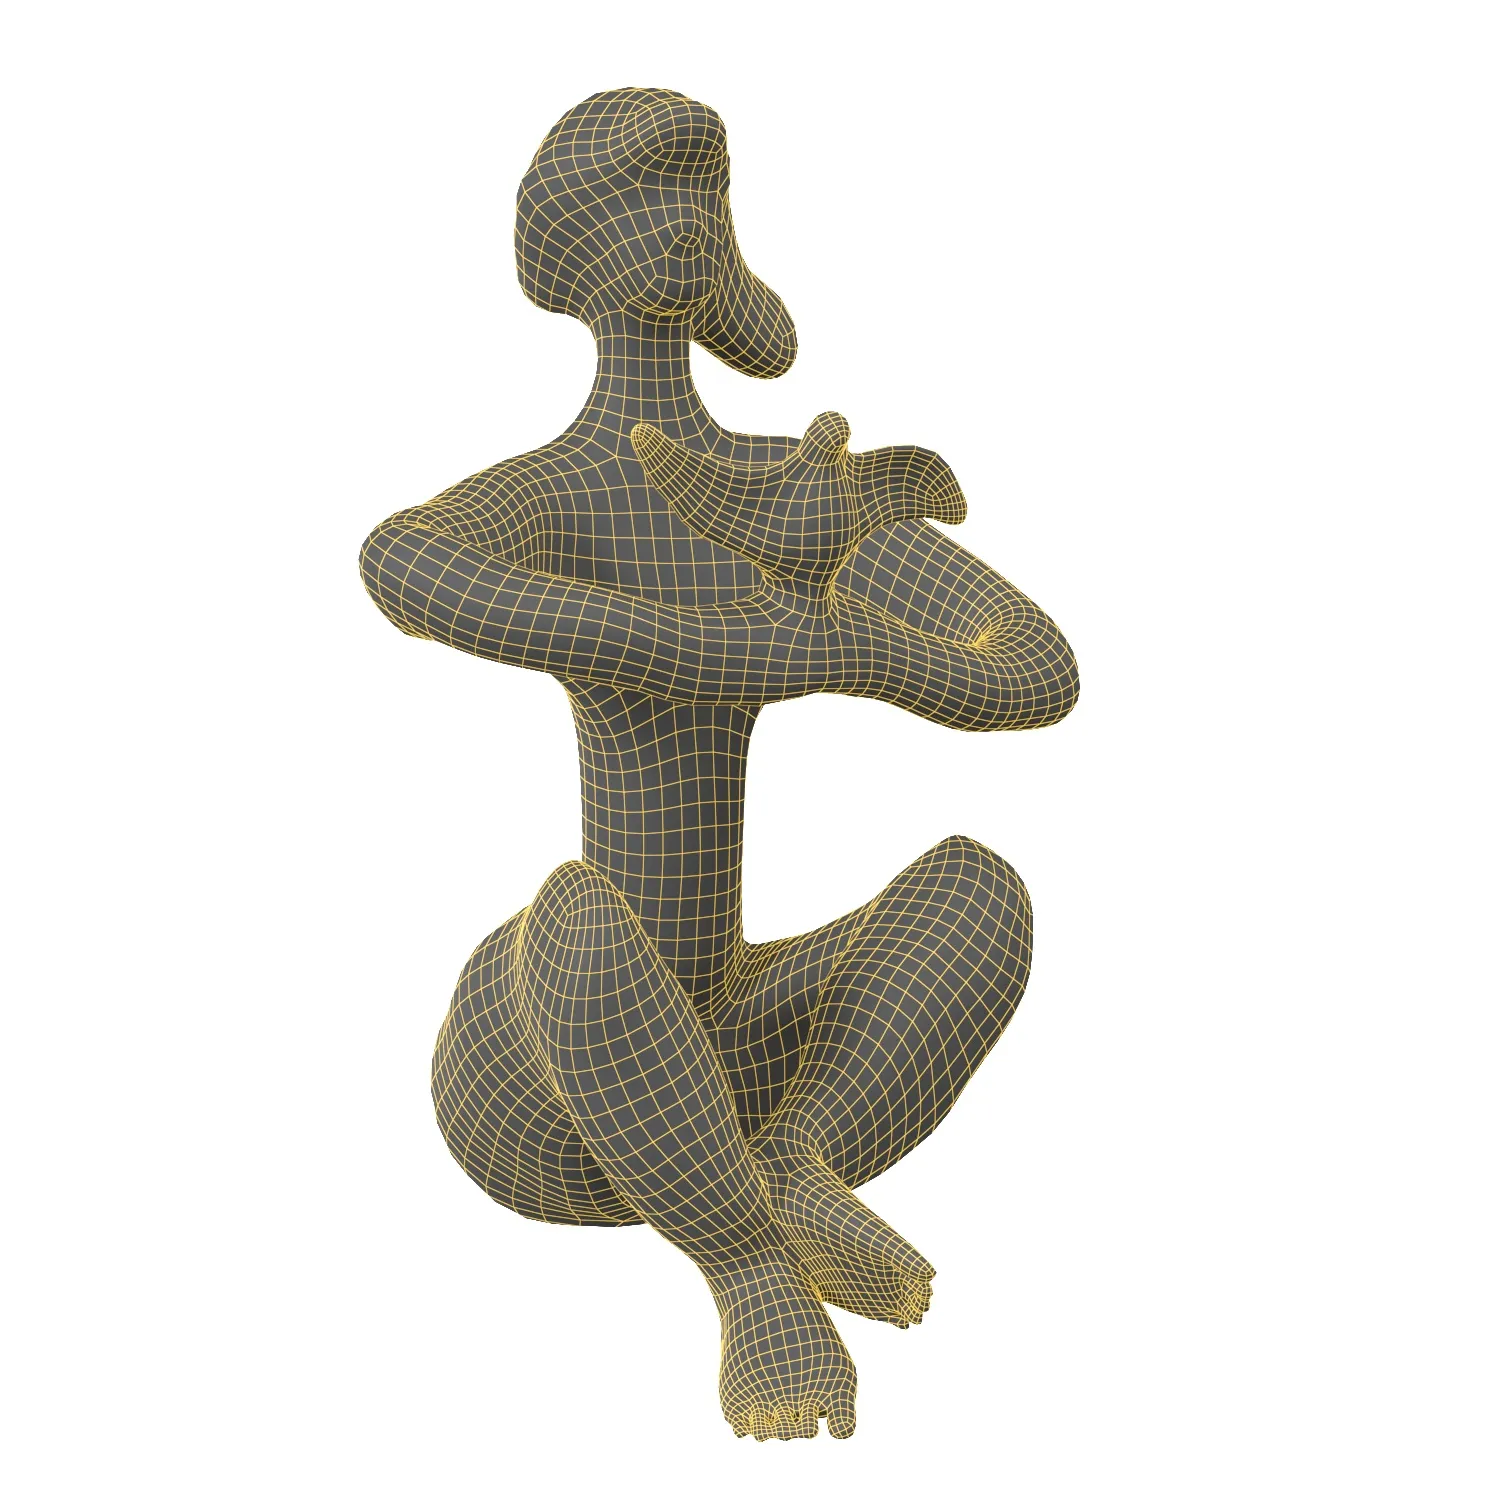 Woman sculpture PBR 3D Model_07